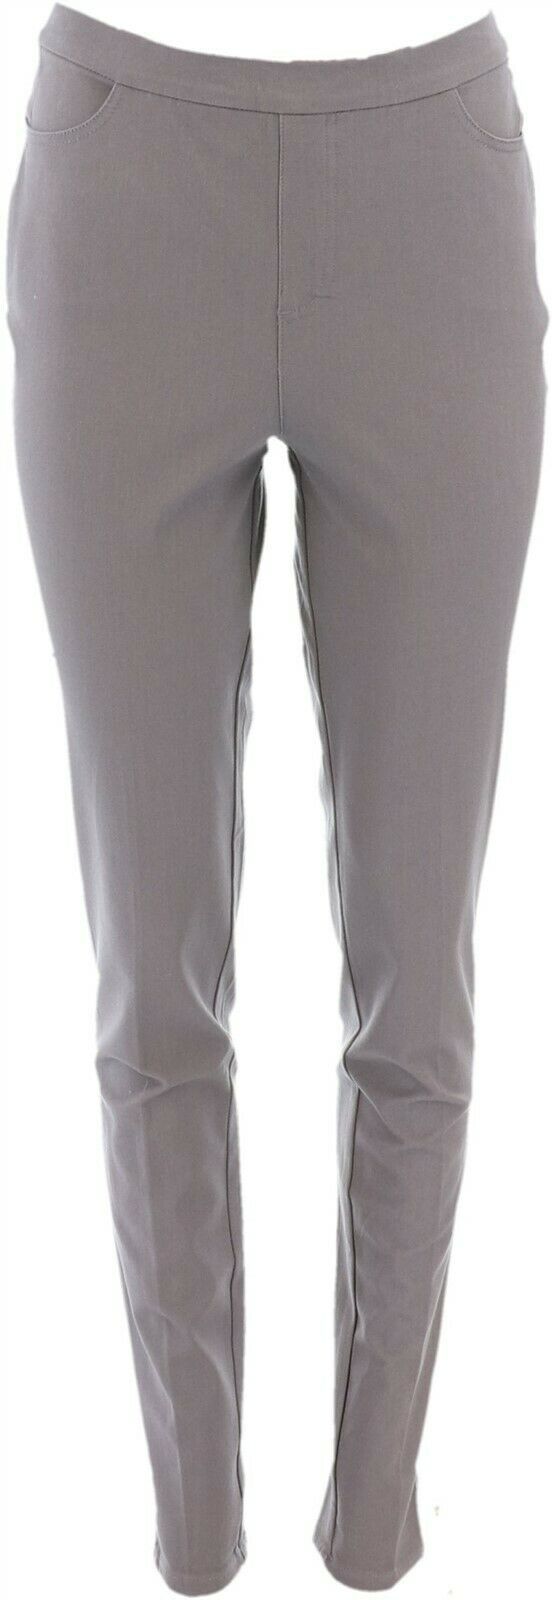 Isaac Mizrahi Tall 24/7 Stretch Slim Leg Pants Pockets Shadow Grey 4 NEW A309568